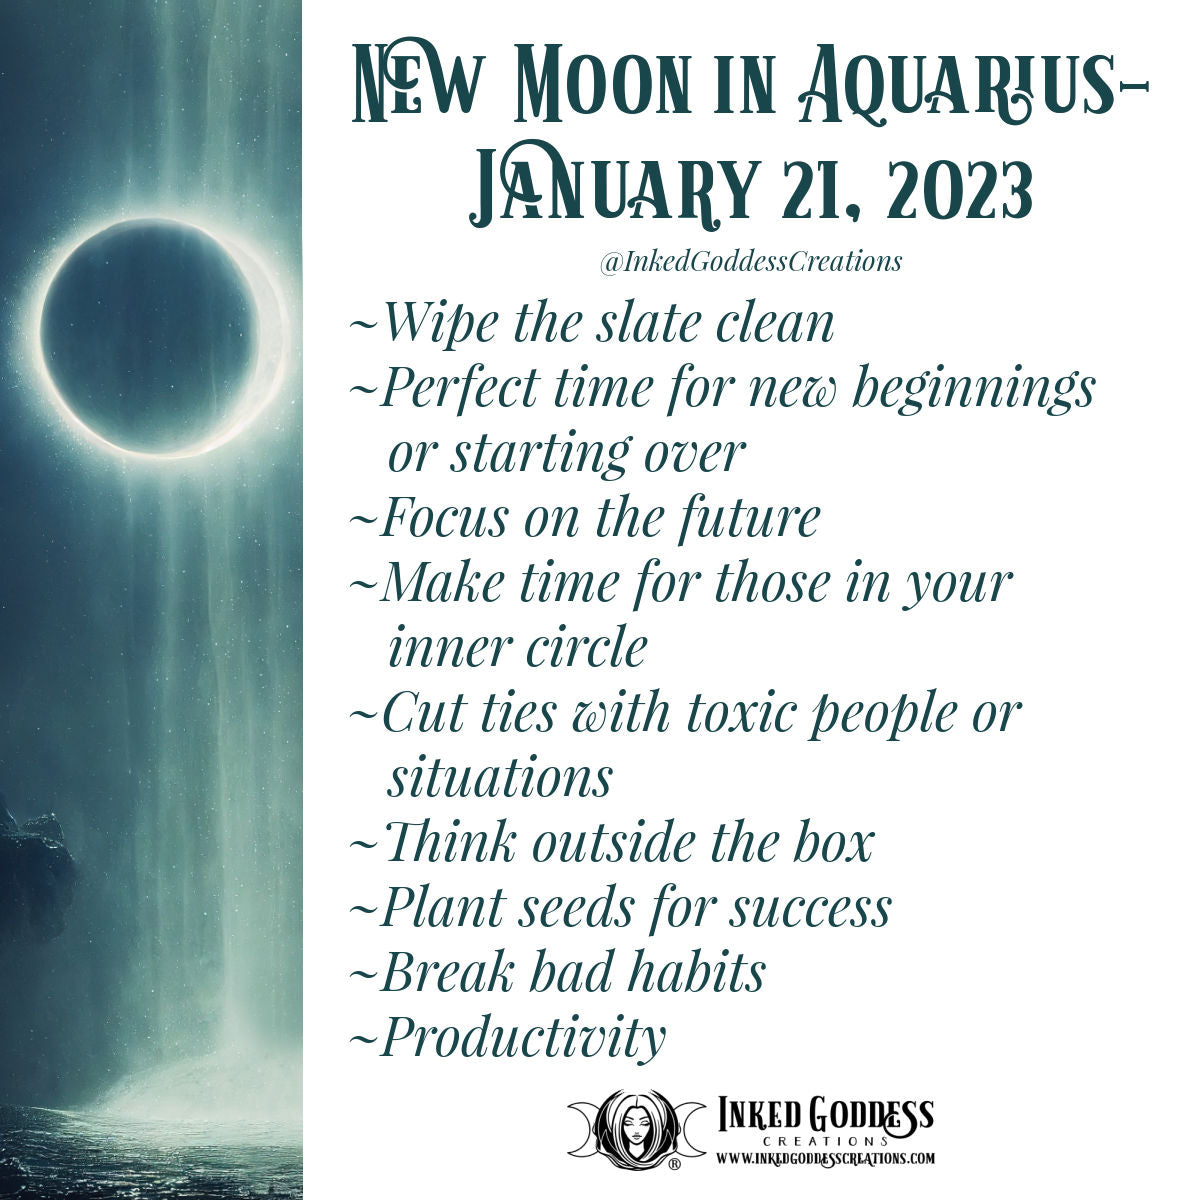 New Moon in Aquarius- January 21, 2023